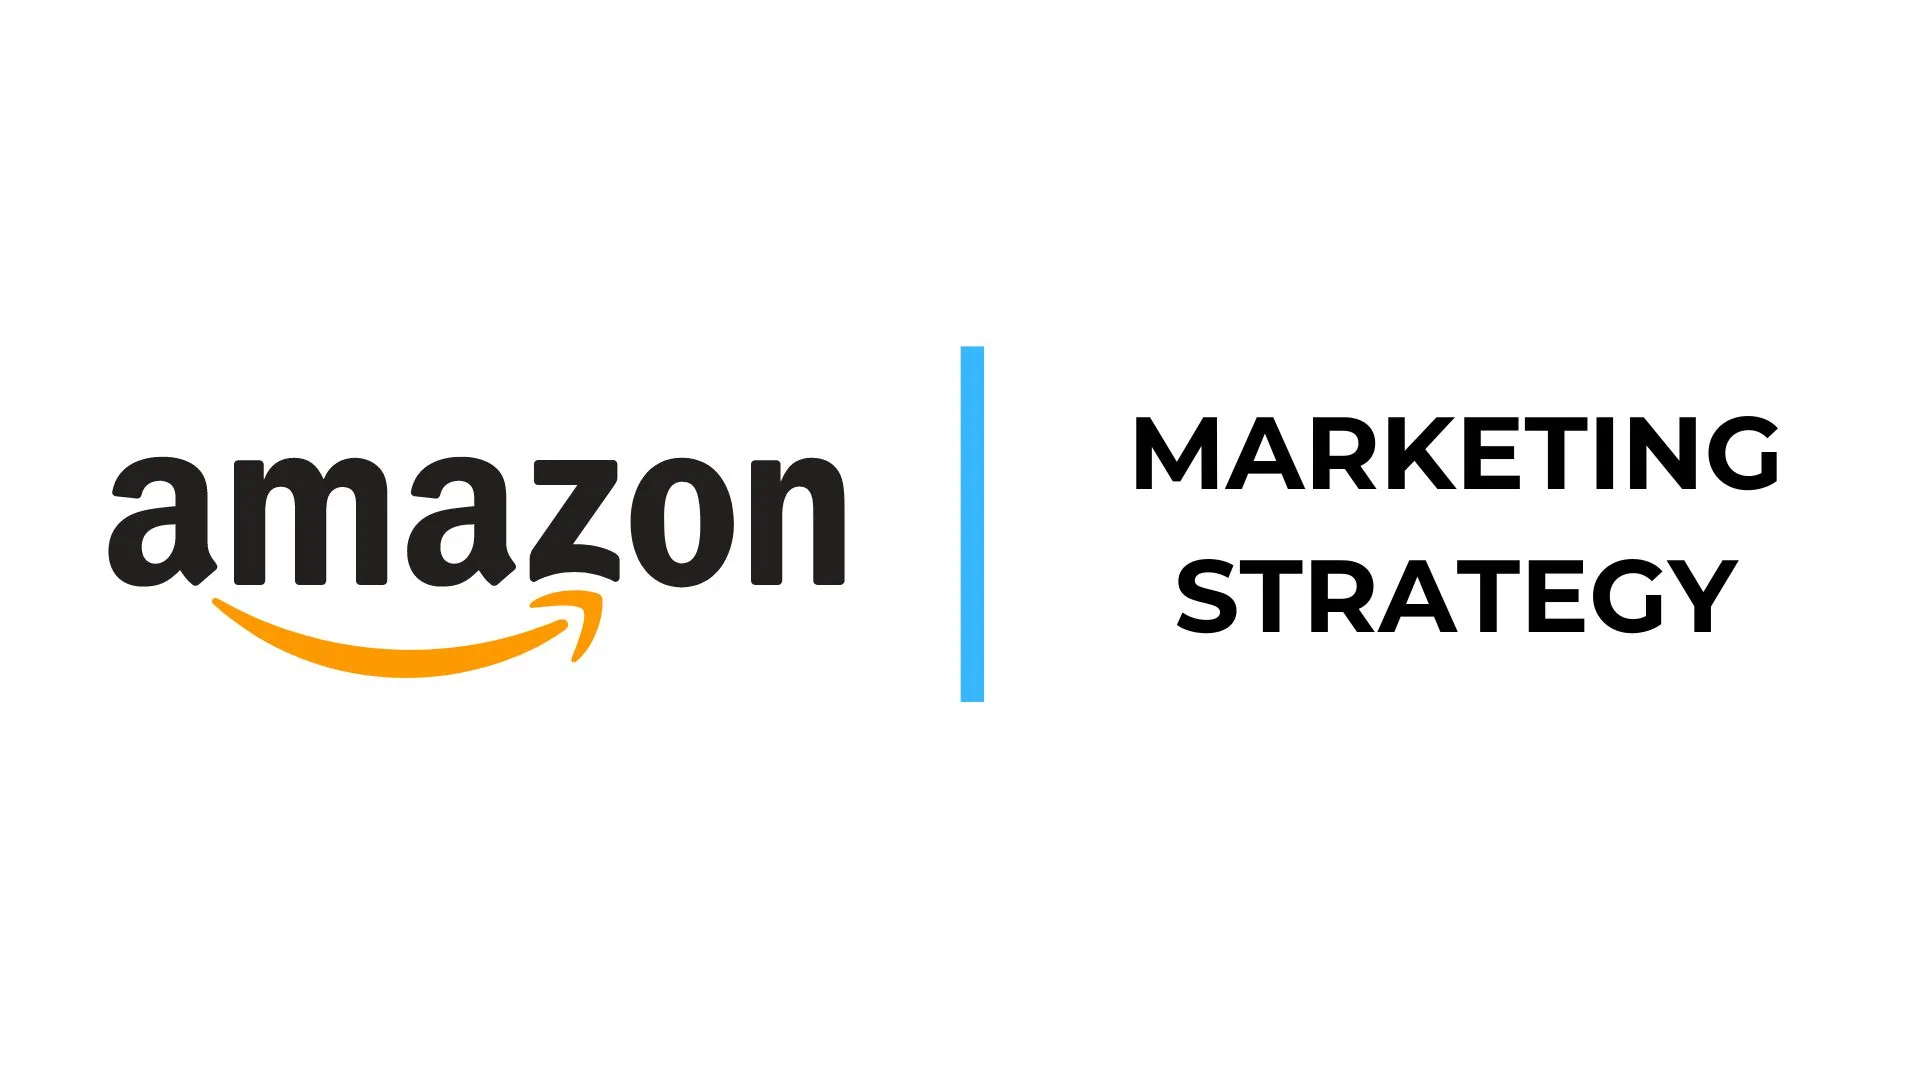 Amazon Marketing Strategy